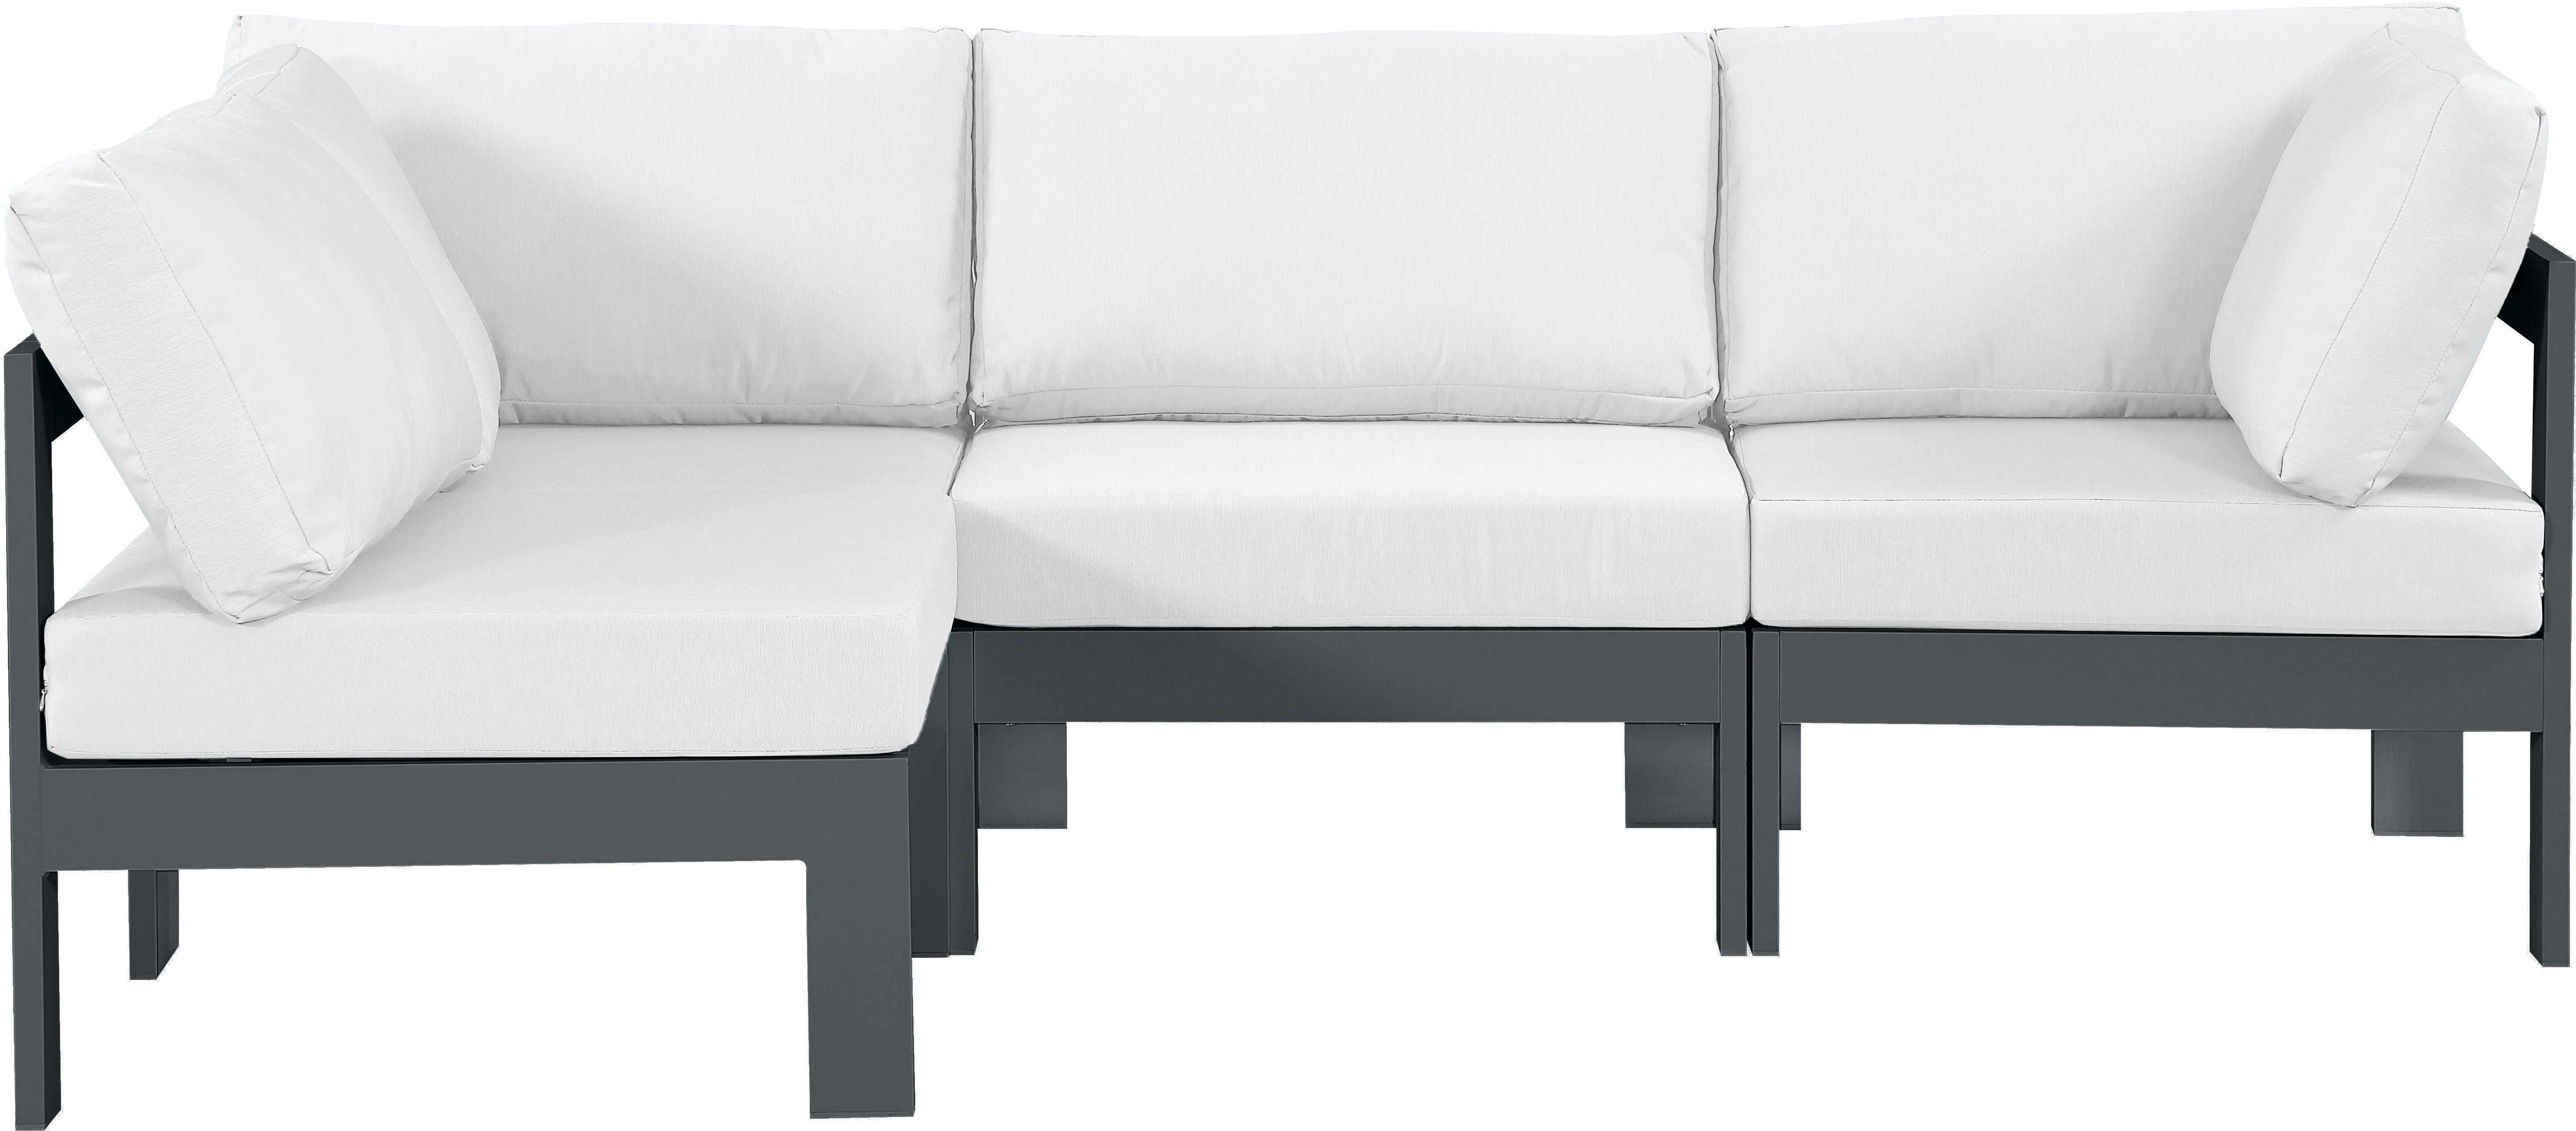 Meridian Furniture - Nizuc - Outdoor Patio Modular Sectional - White - Fabric - Modern & Contemporary - 5th Avenue Furniture